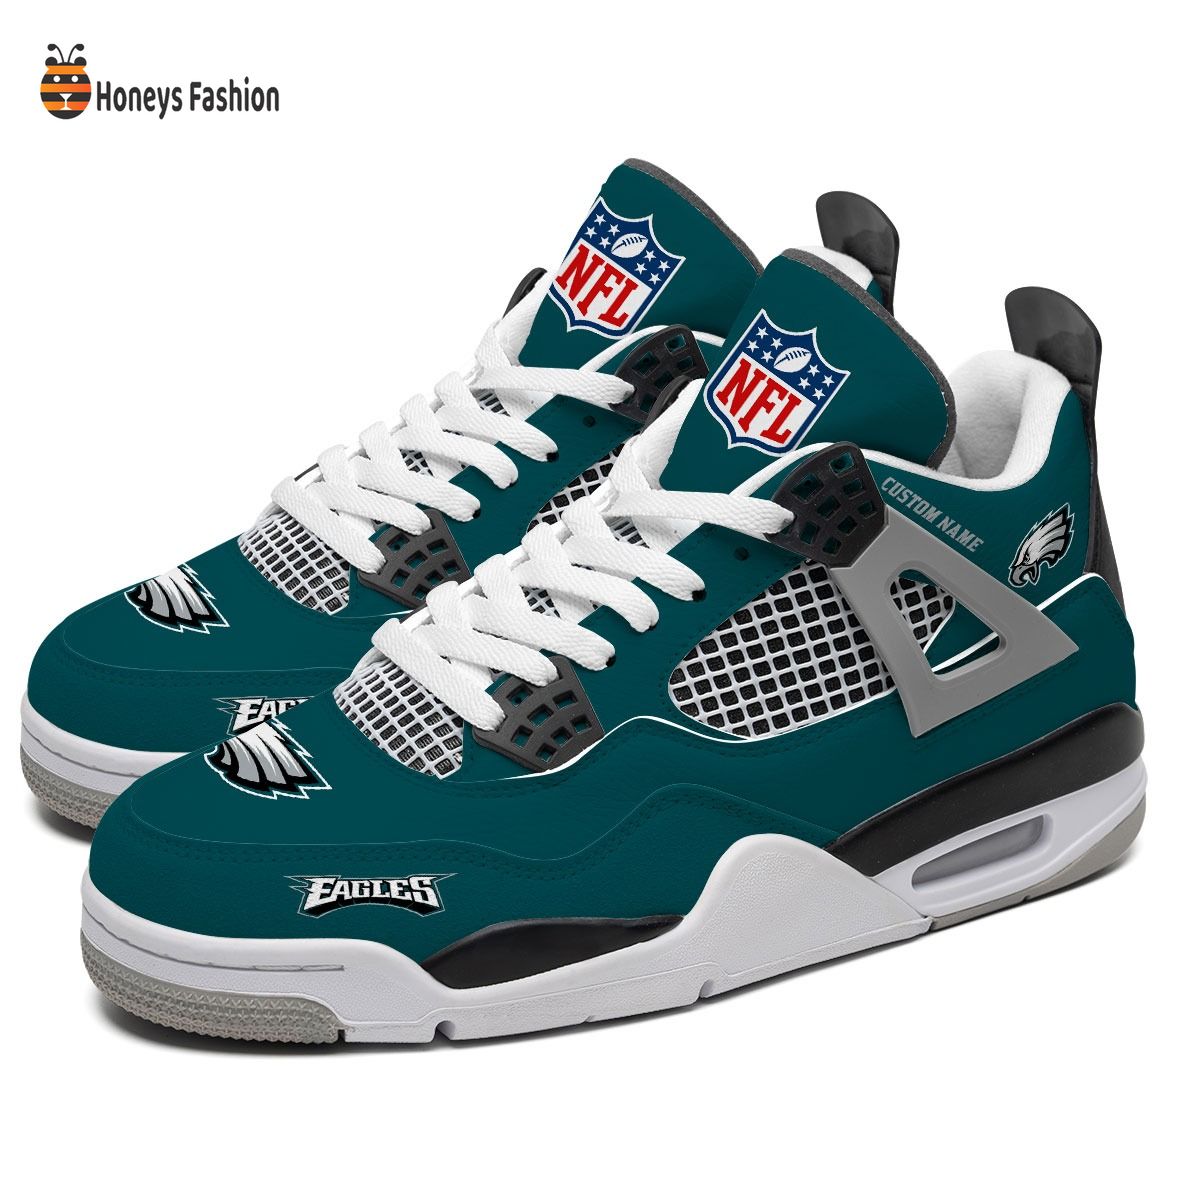 Philadelphia Eagles NFL Air Jordan 4 Shoes